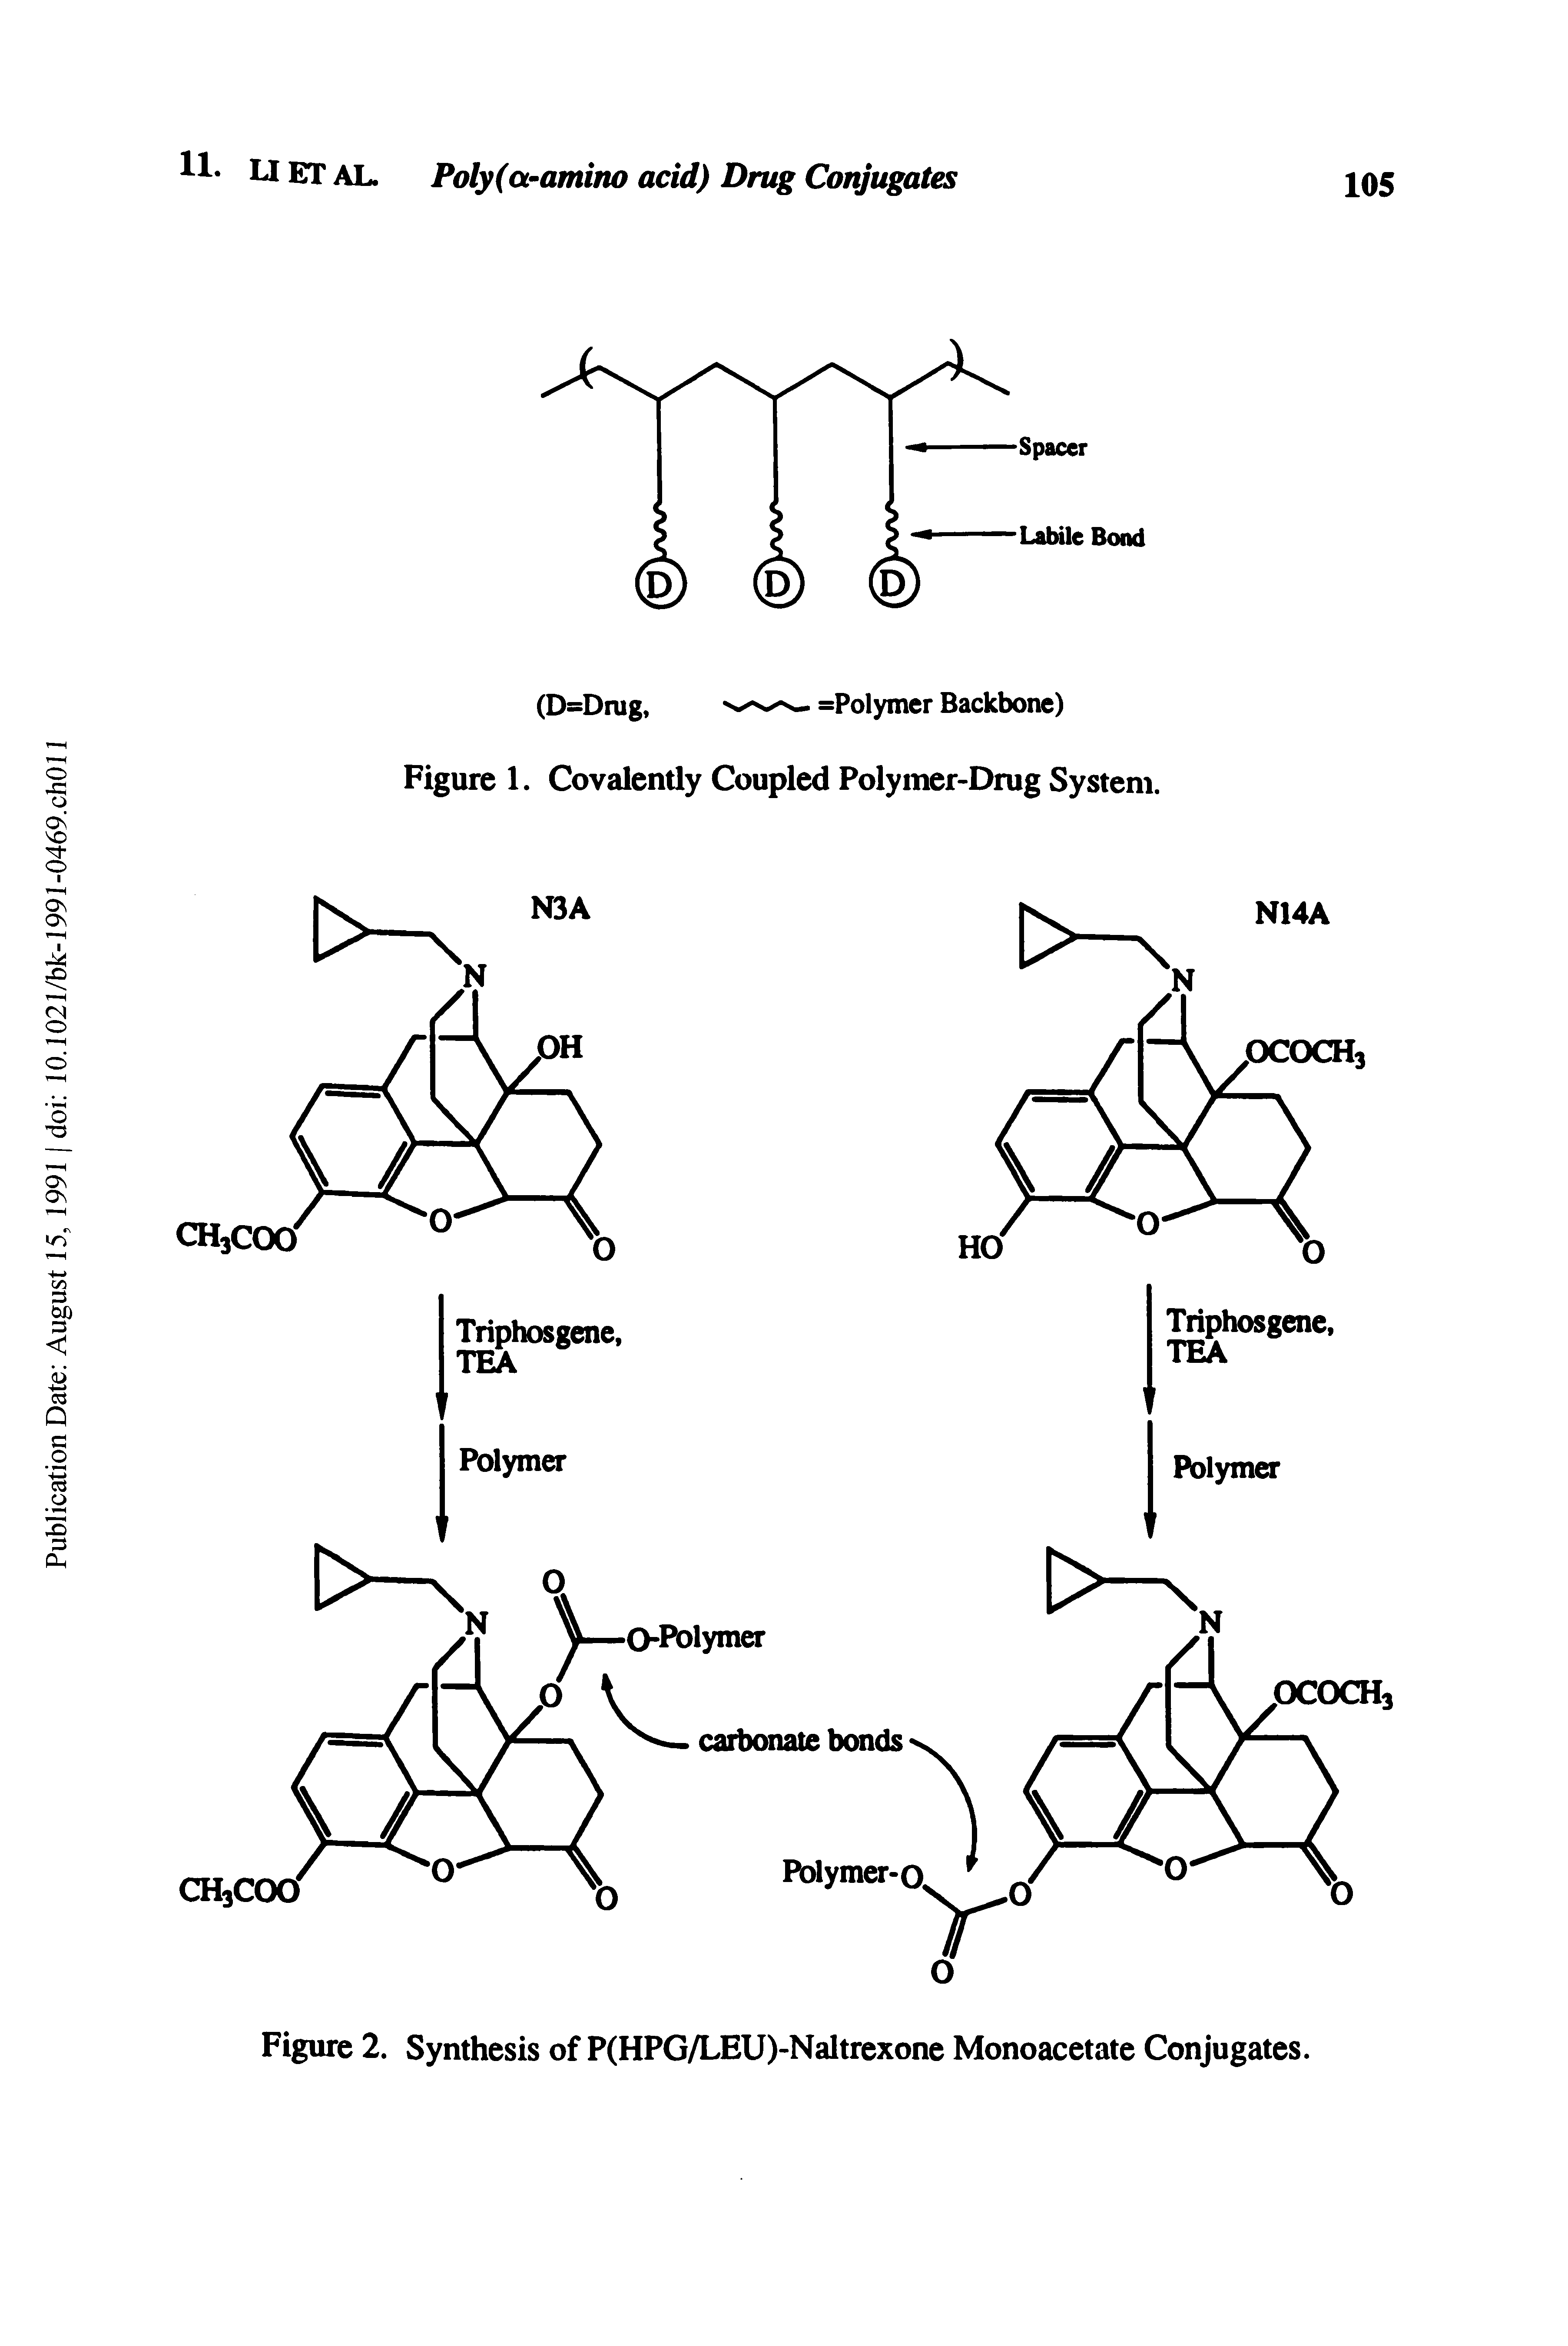 Figure 1. Covalently Coupled Polymer-Drug System.